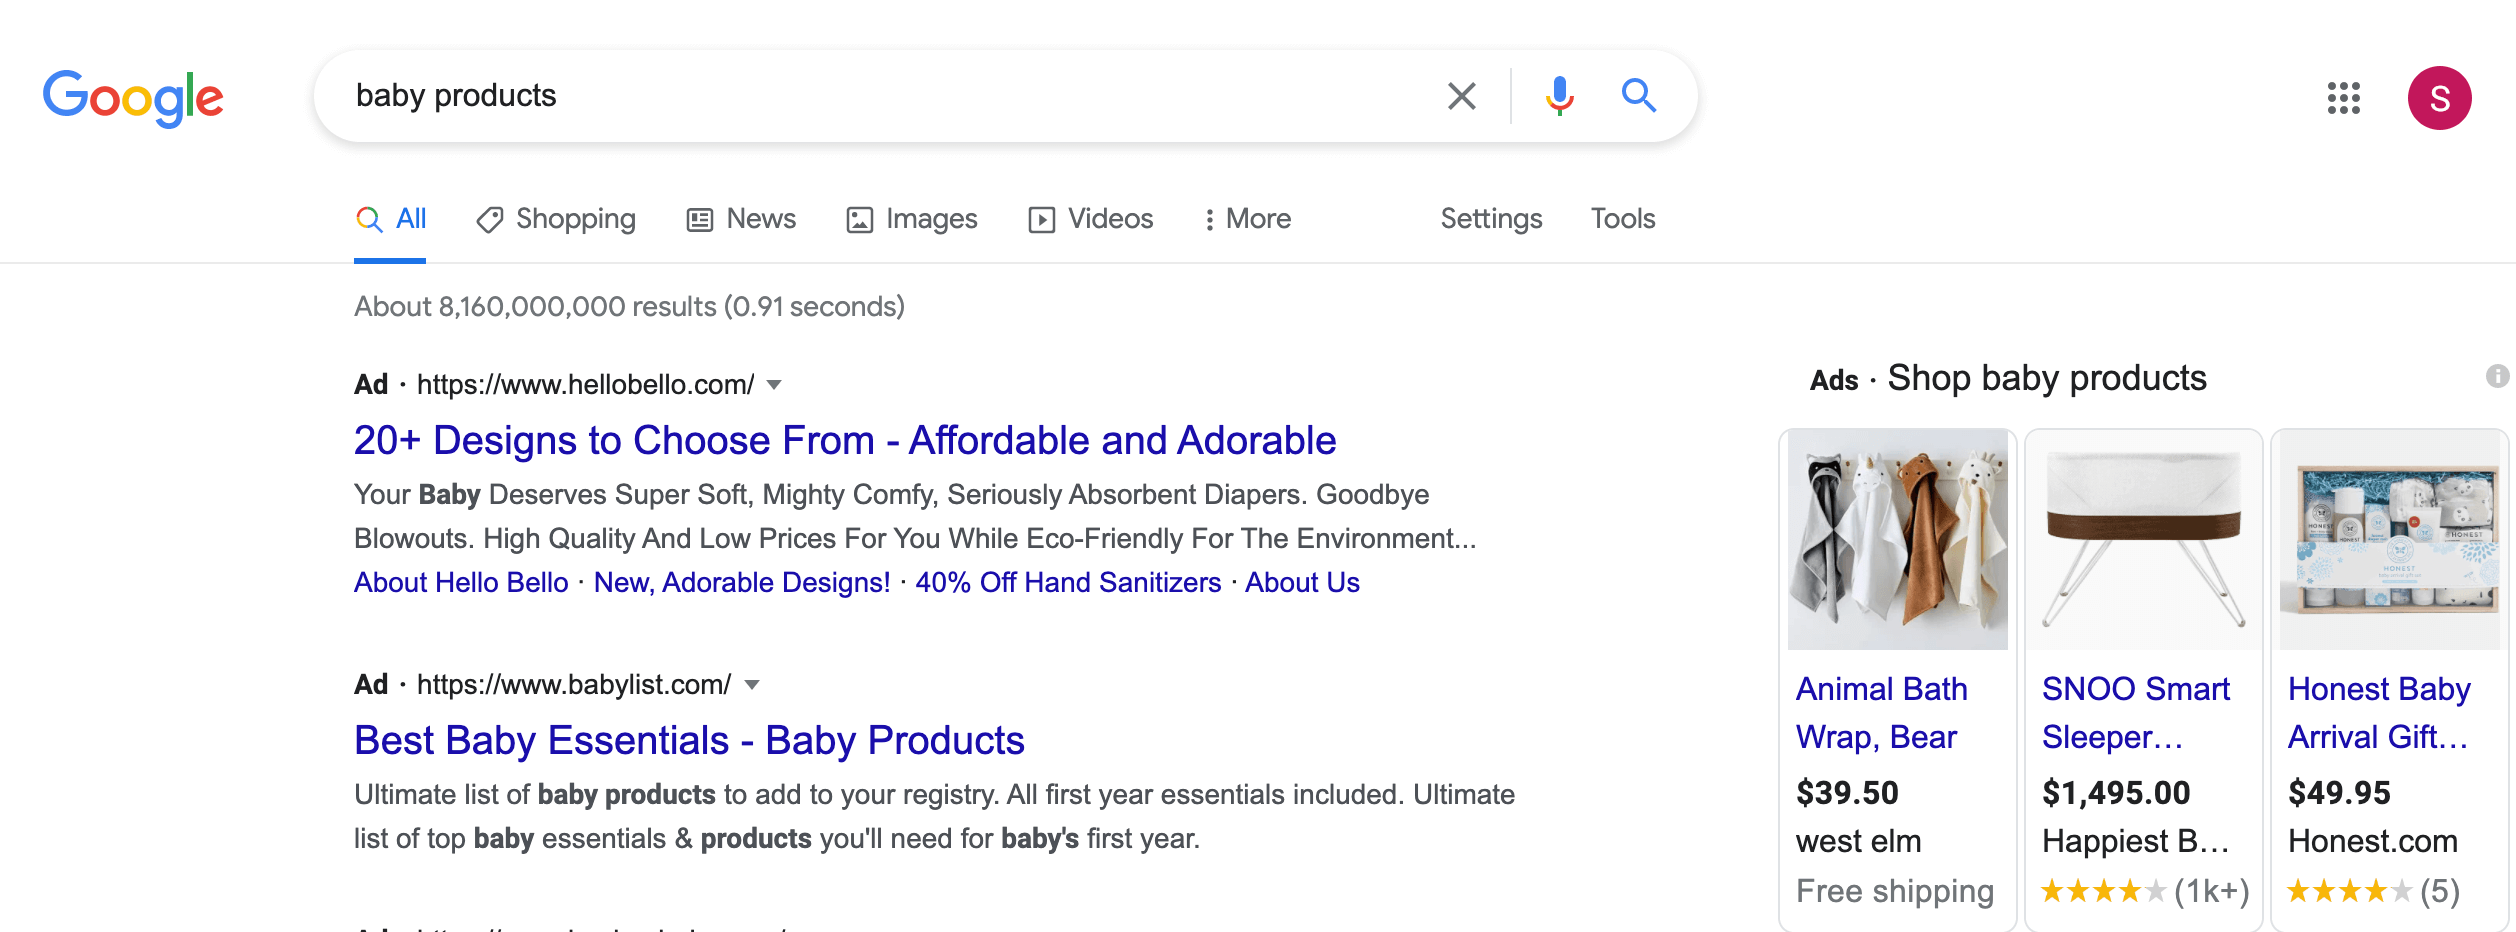 Google Ads Marketing